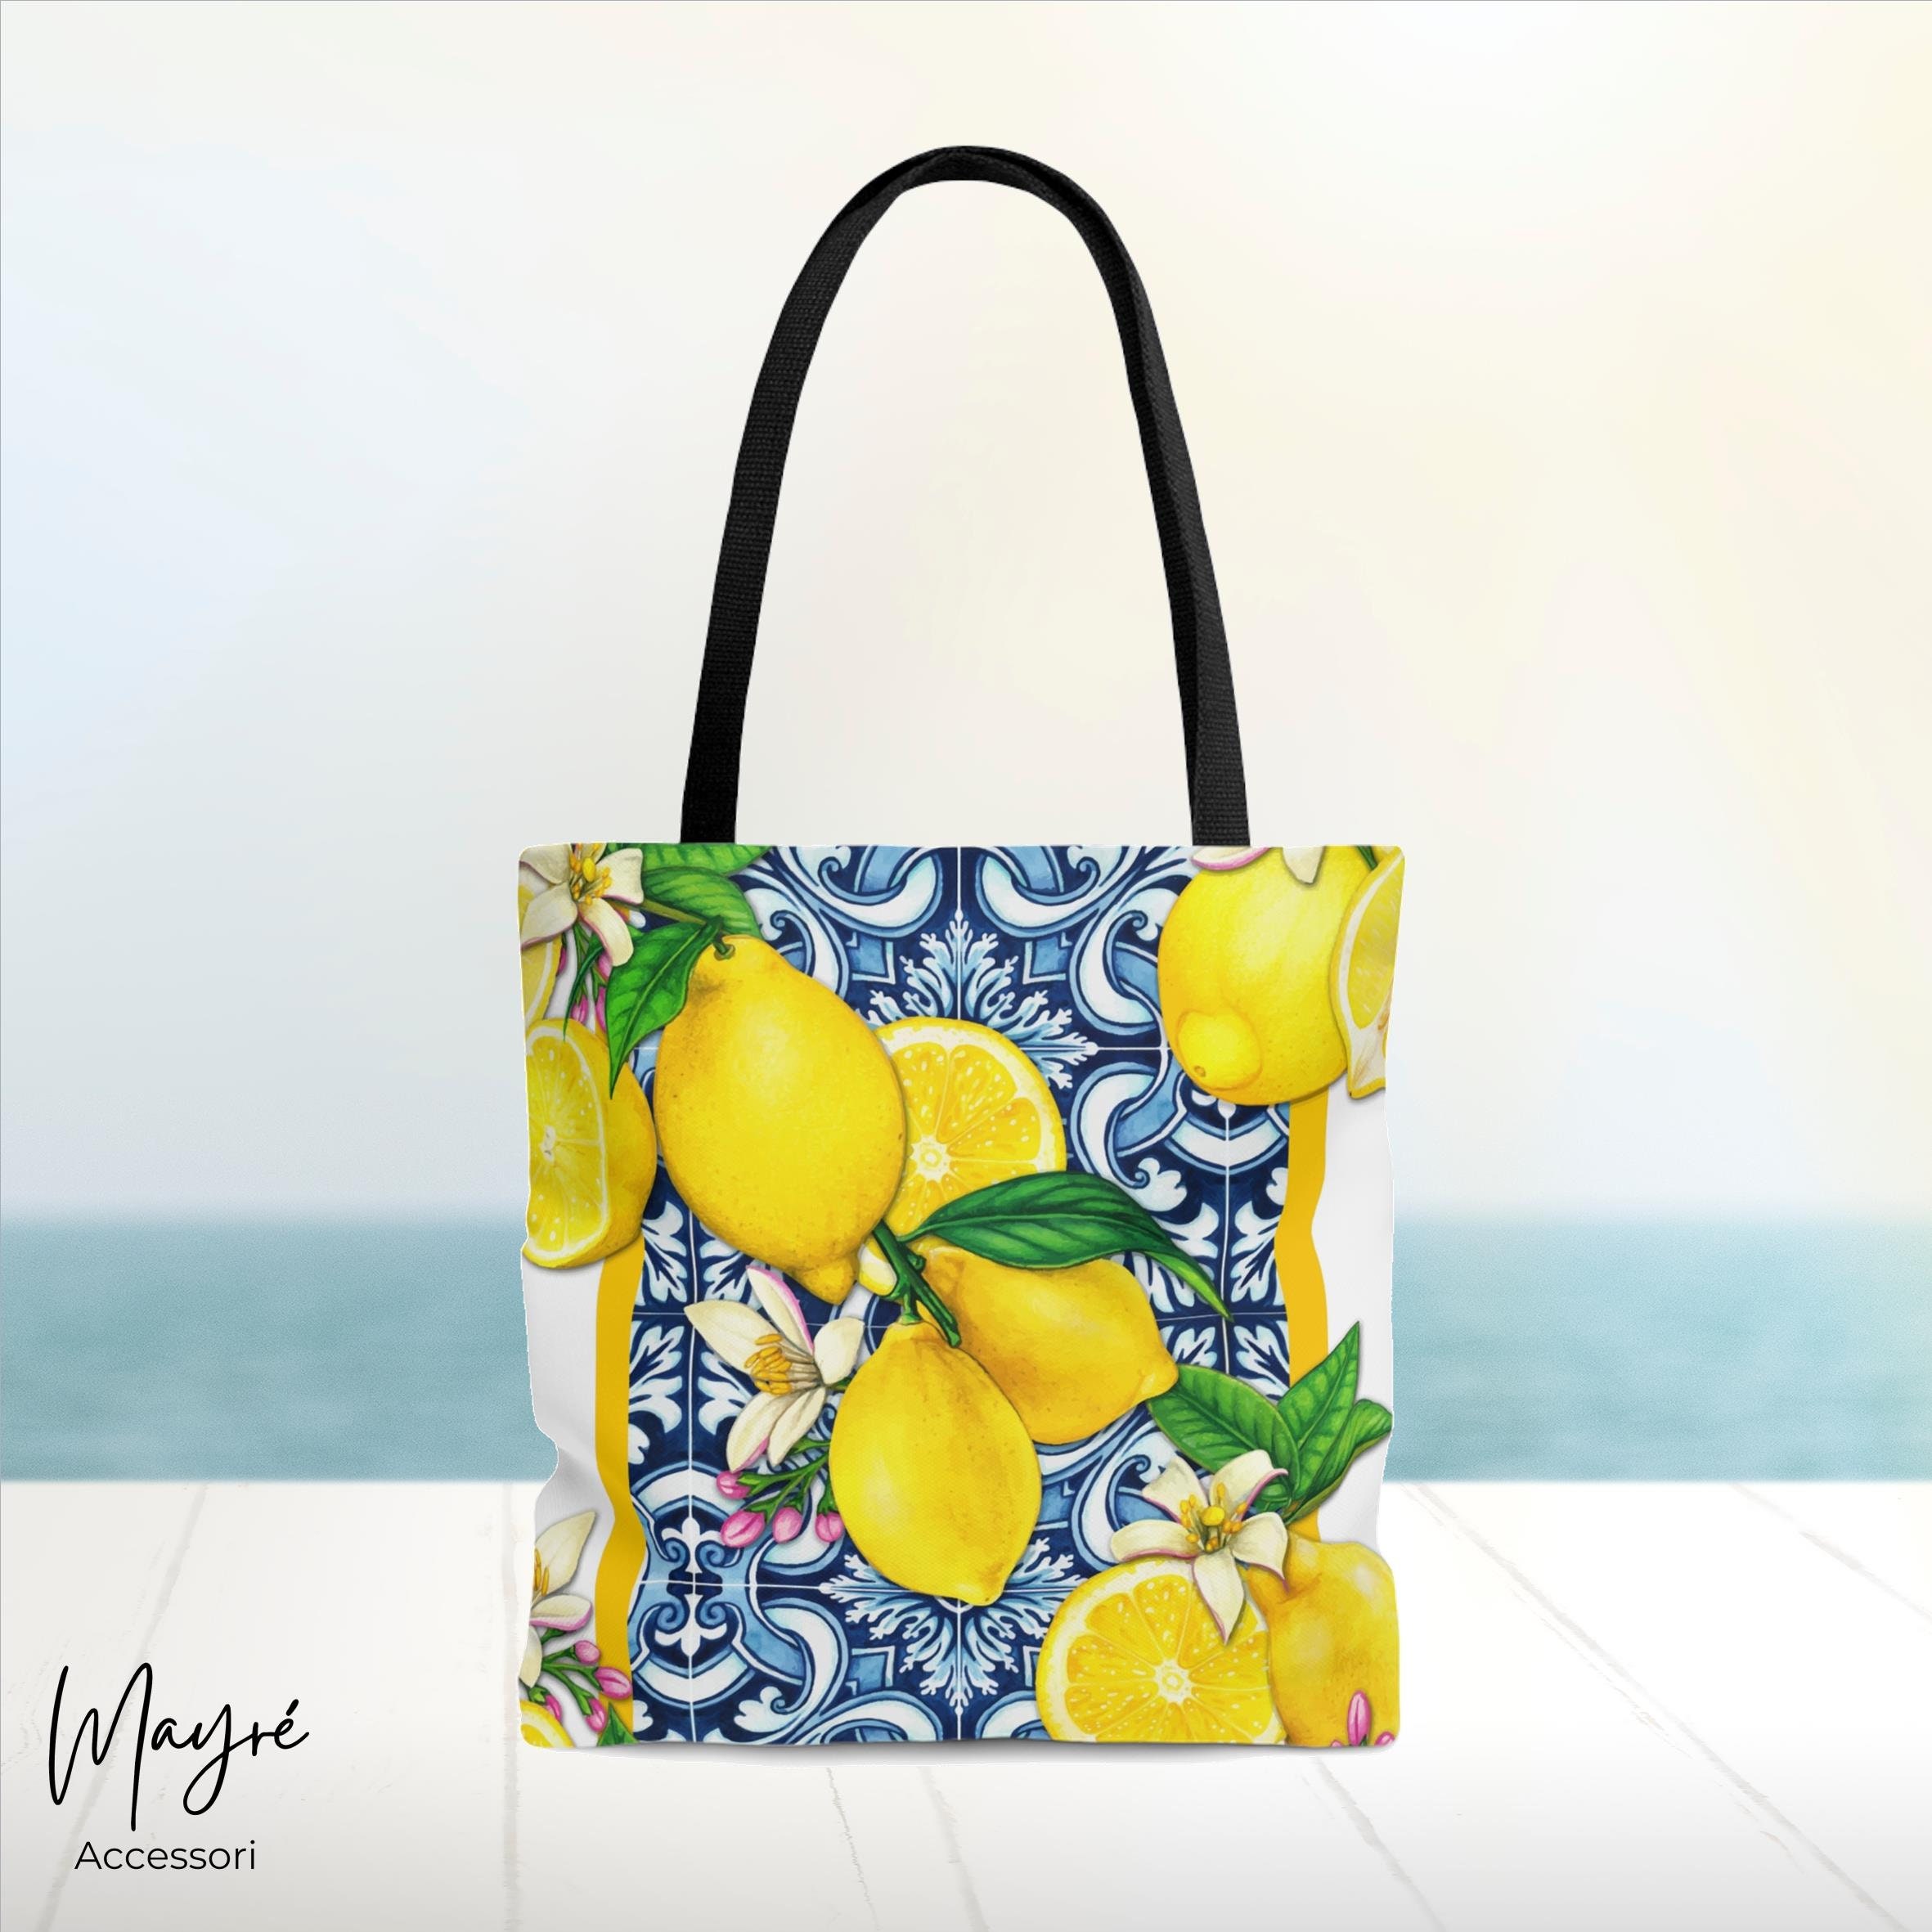 Positano Clutch Bag Purse Pochette - Artisan Italy Lemon Tile